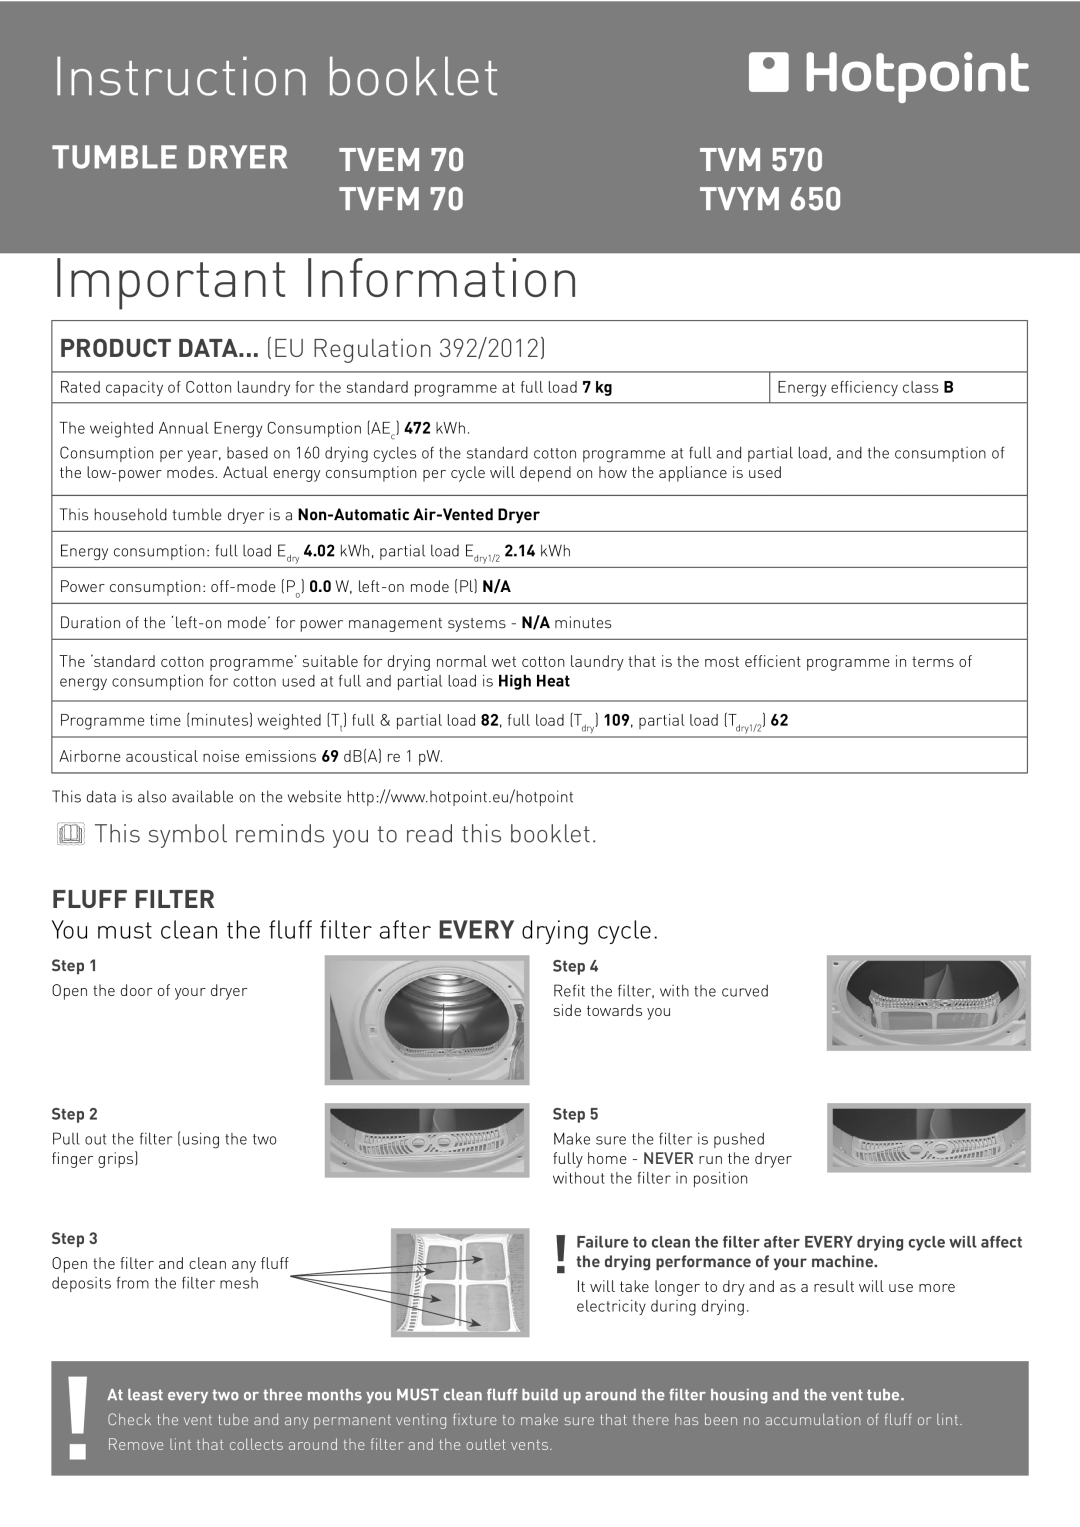 Hotpoint TVM 570 manual Instruction booklet, Important Information, Fluff Filter, Step, Tumble Dryer Tvem, Tvfm, Tvym 